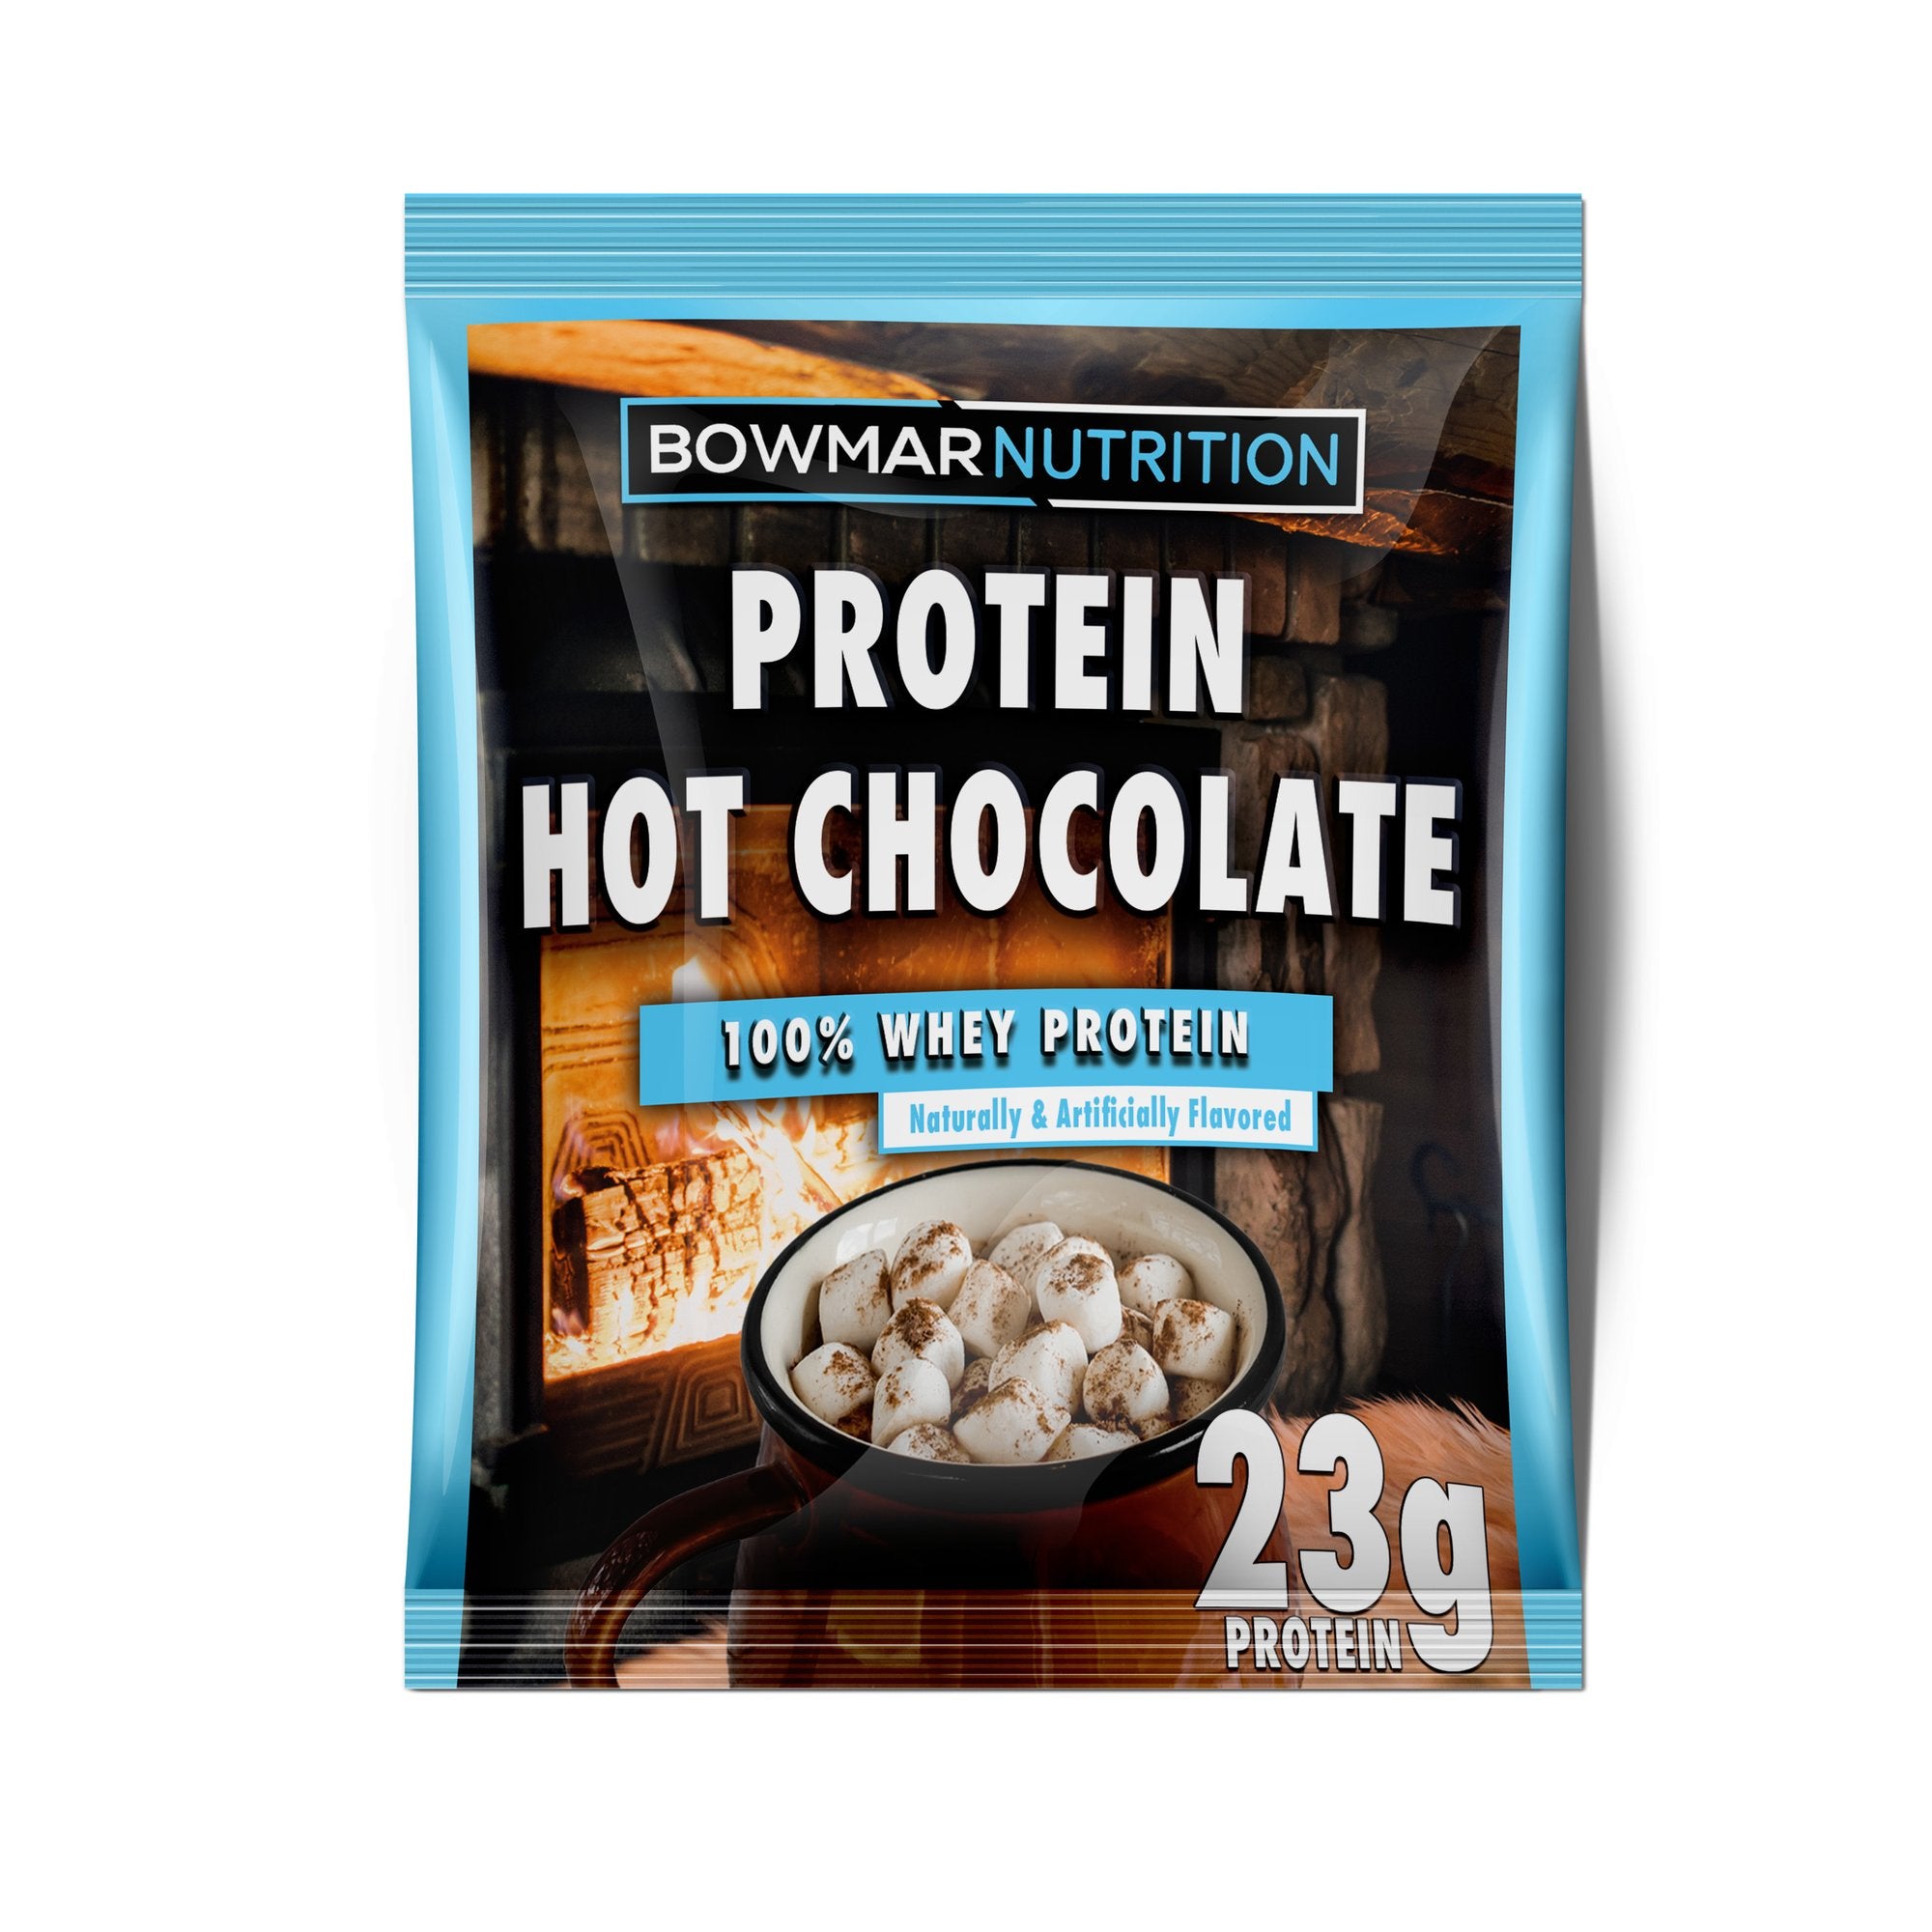 Bowmar Whey Protein Powder Sample (1 serving) bowmar-protein-powder-sachet-1-packet Protein Snacks Hot Chocolate bowmar